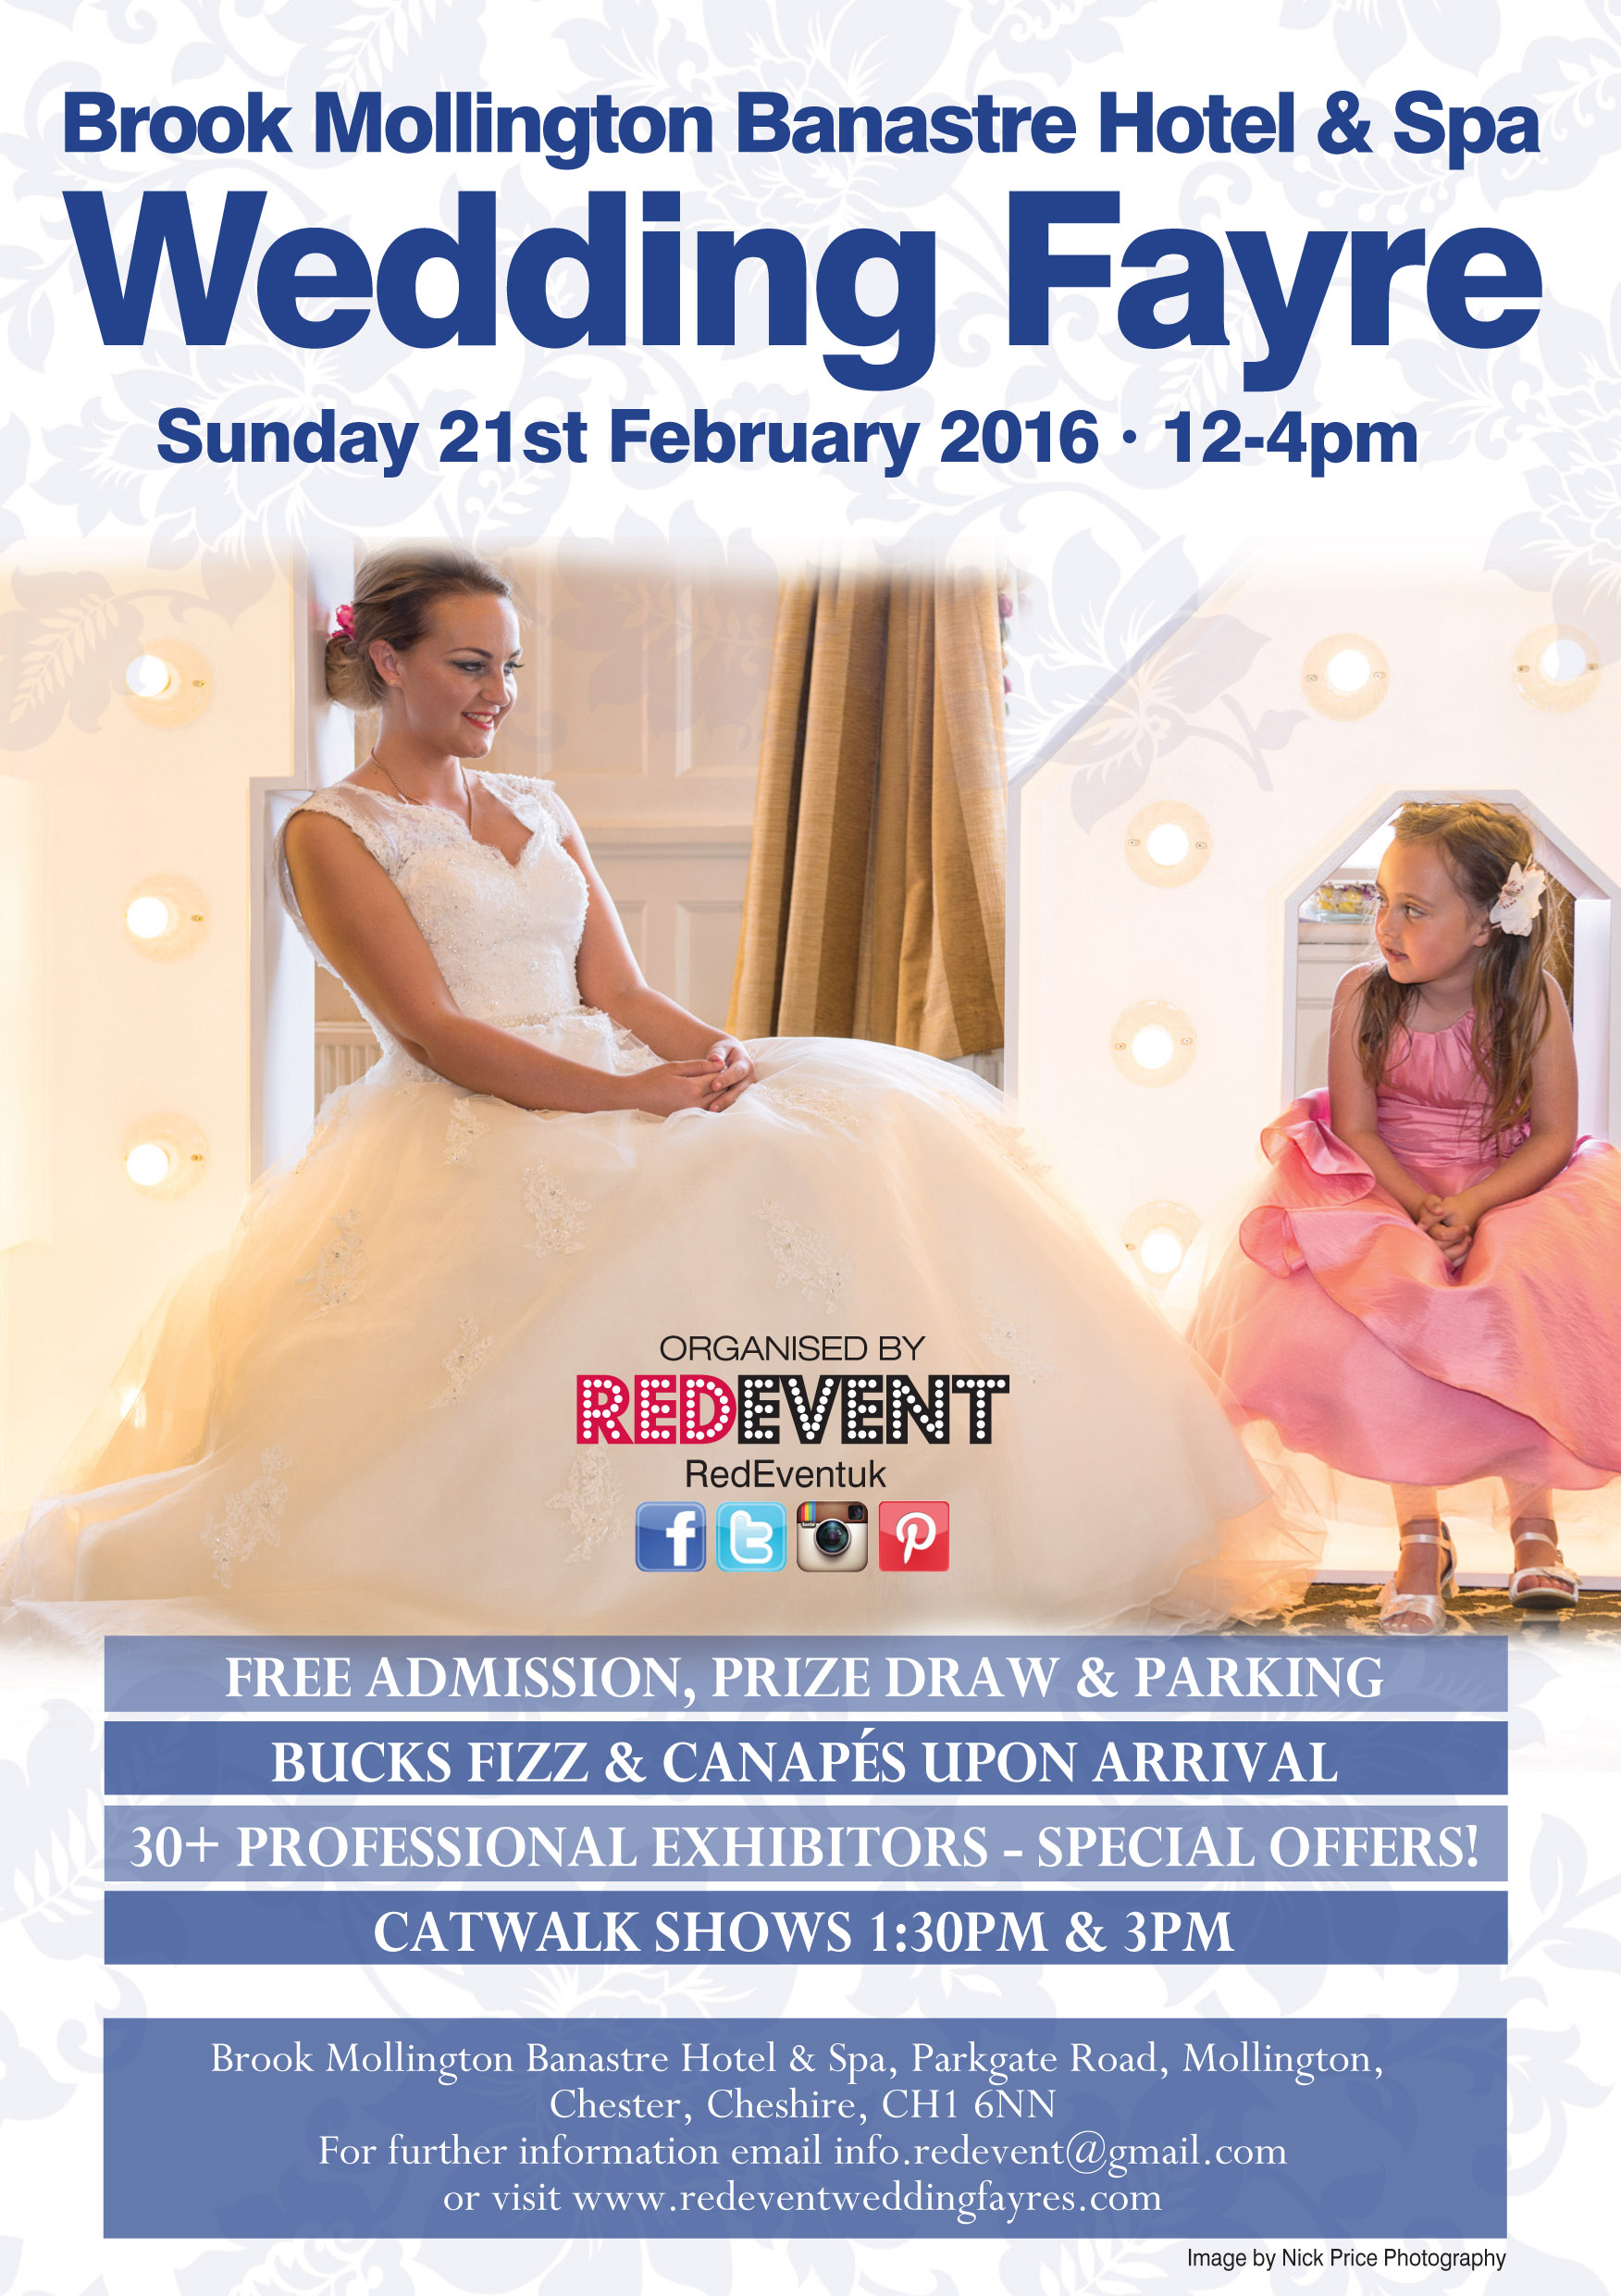 Brook Mollington Banastre Hotel & Spa Red Event Wedding Fayres Cheshire, Chester, Merseyside .jpg